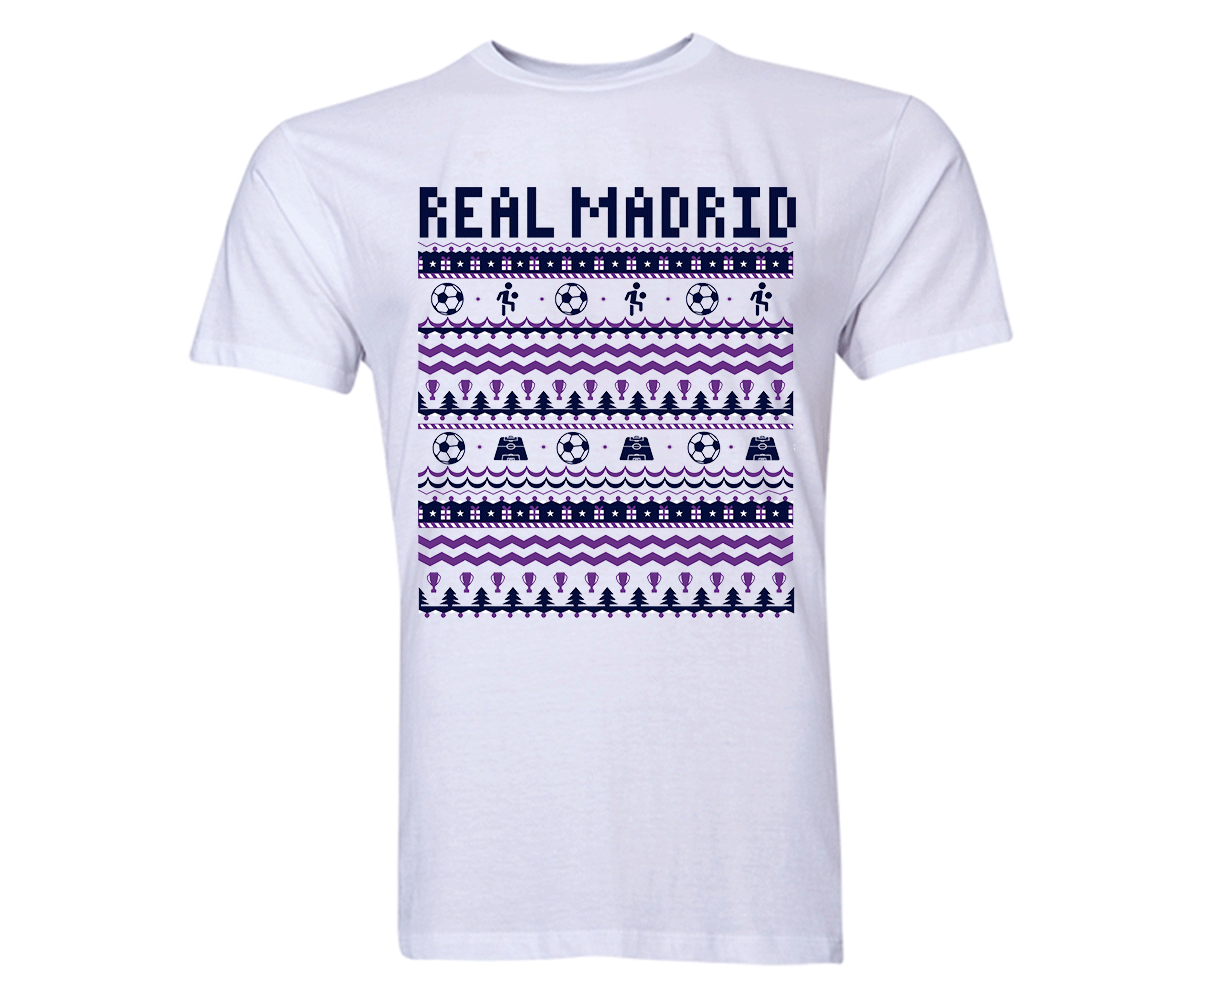 Real Madrid Christmas T-Shirt (White) - Kids